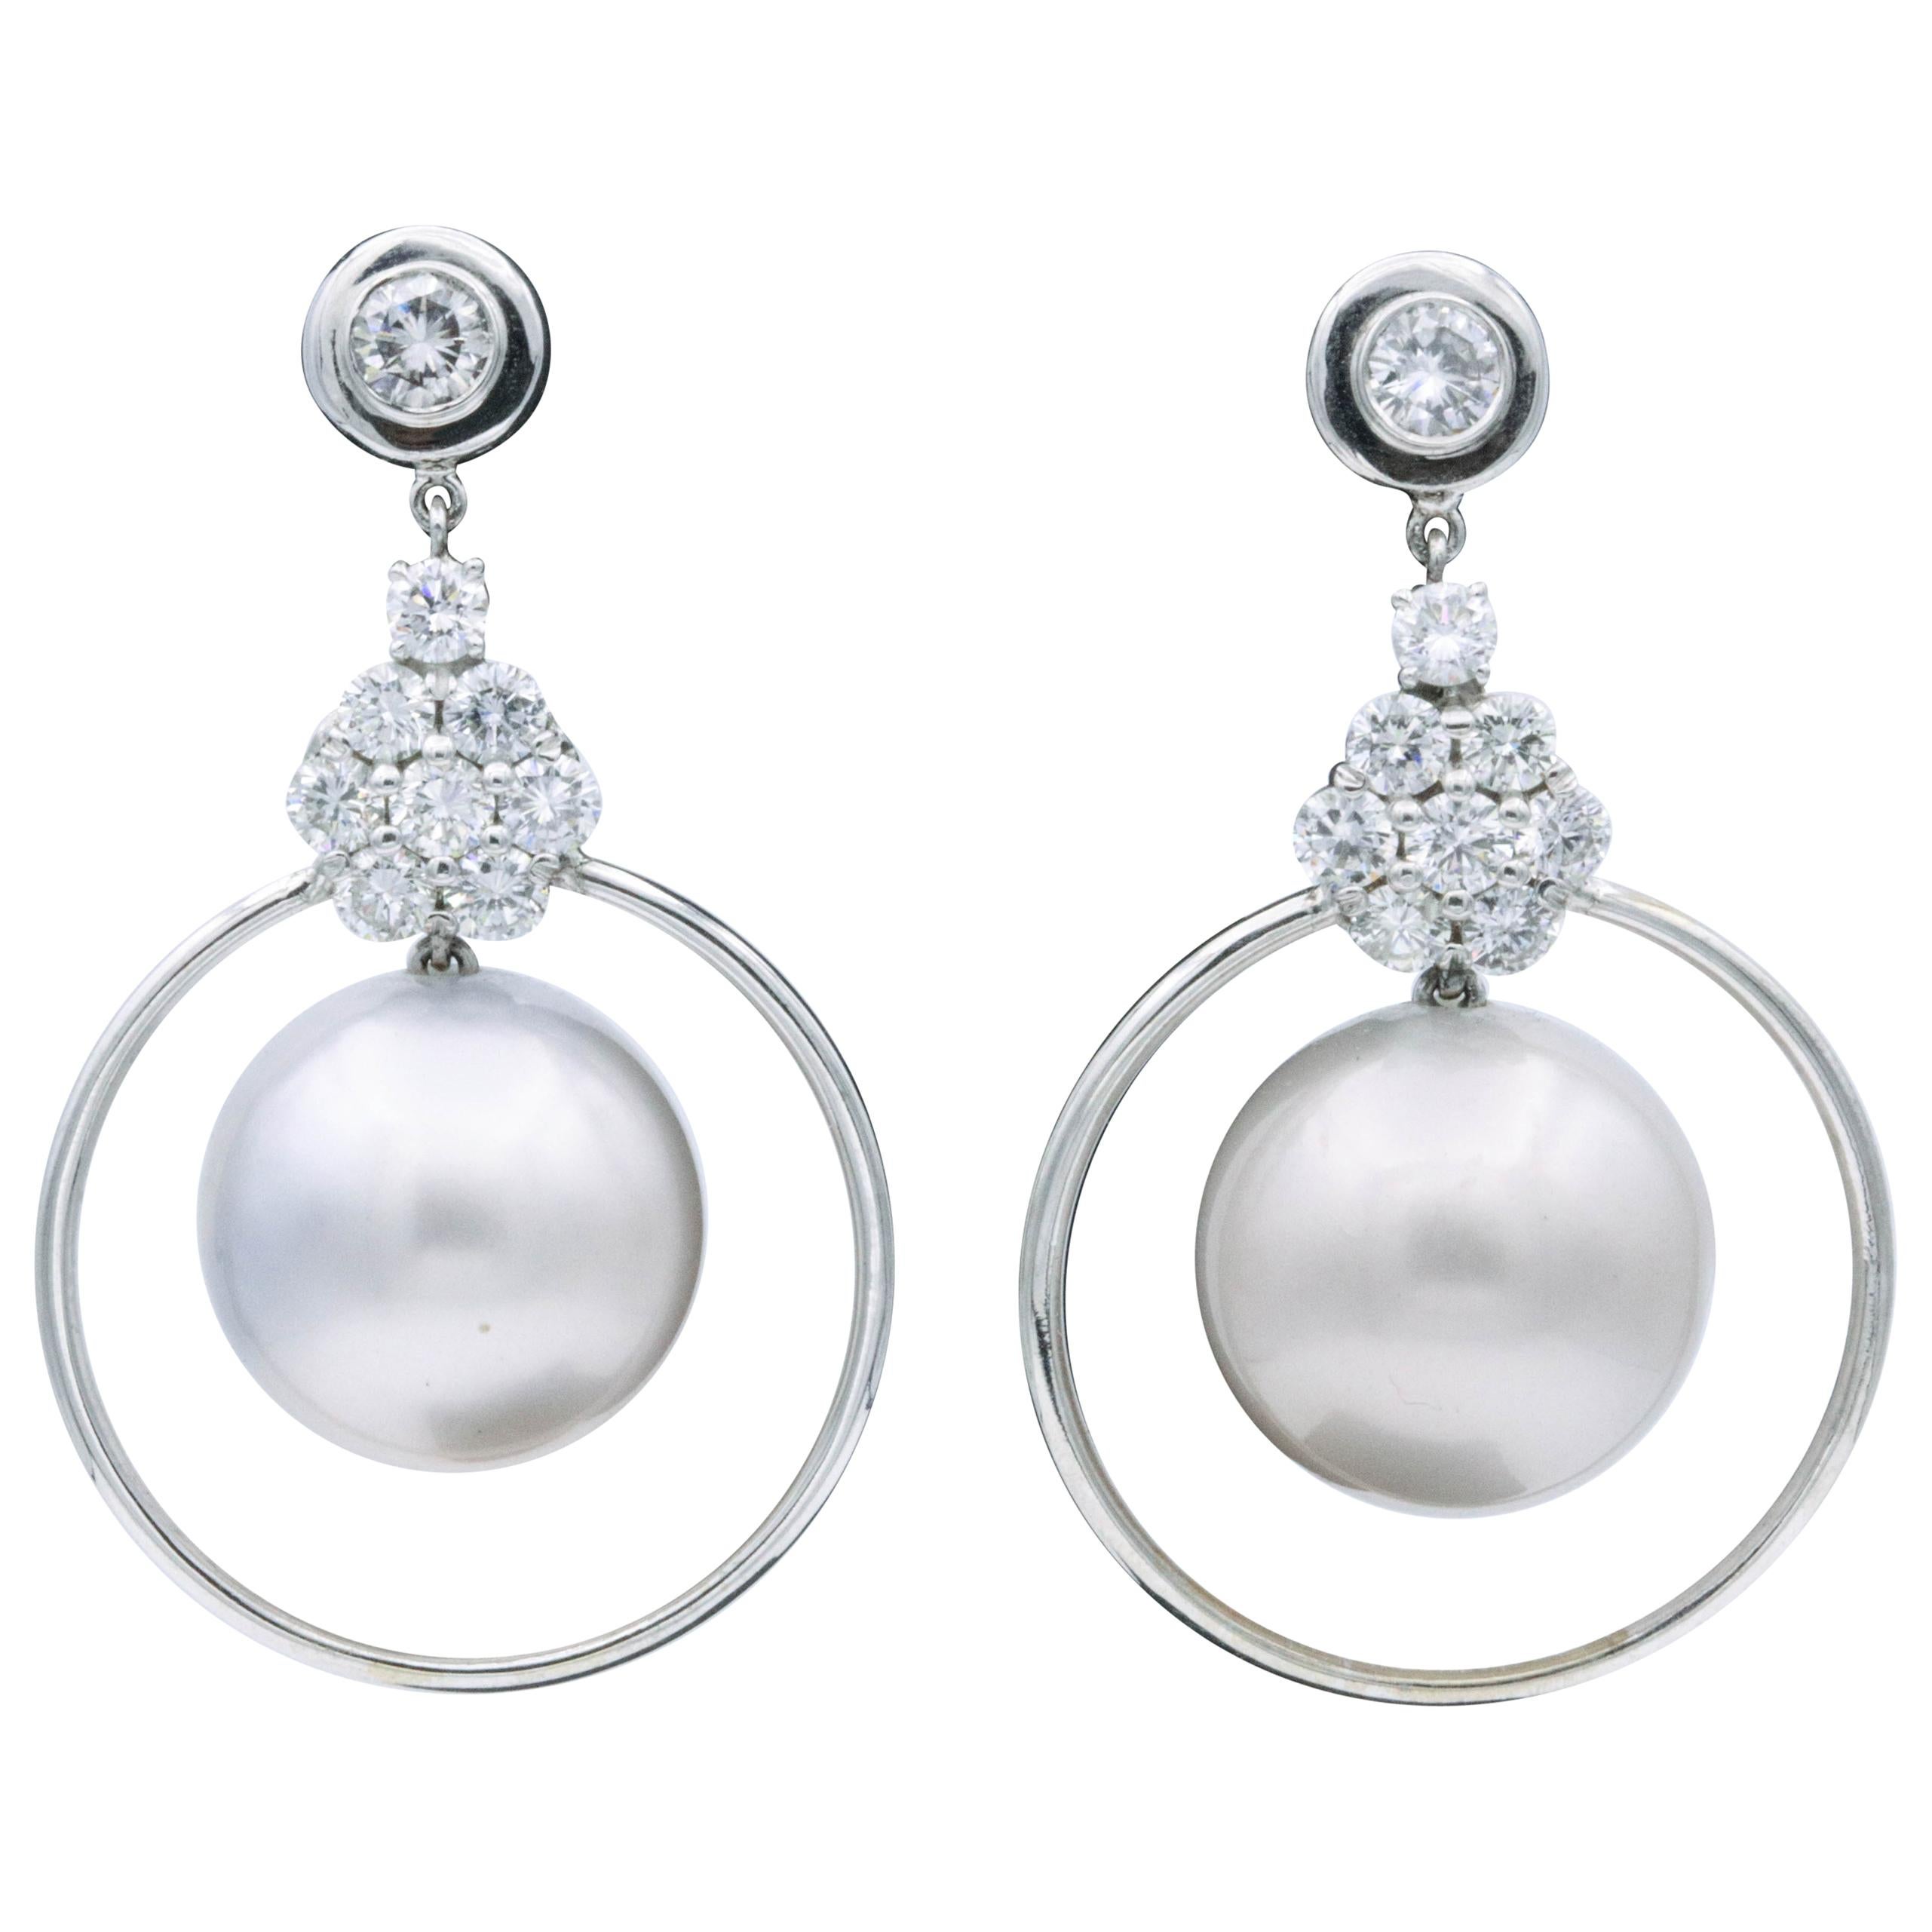 Pearl and Diamond Floral Drop Hoop Earrings 2.21 Carat 14K White Gold